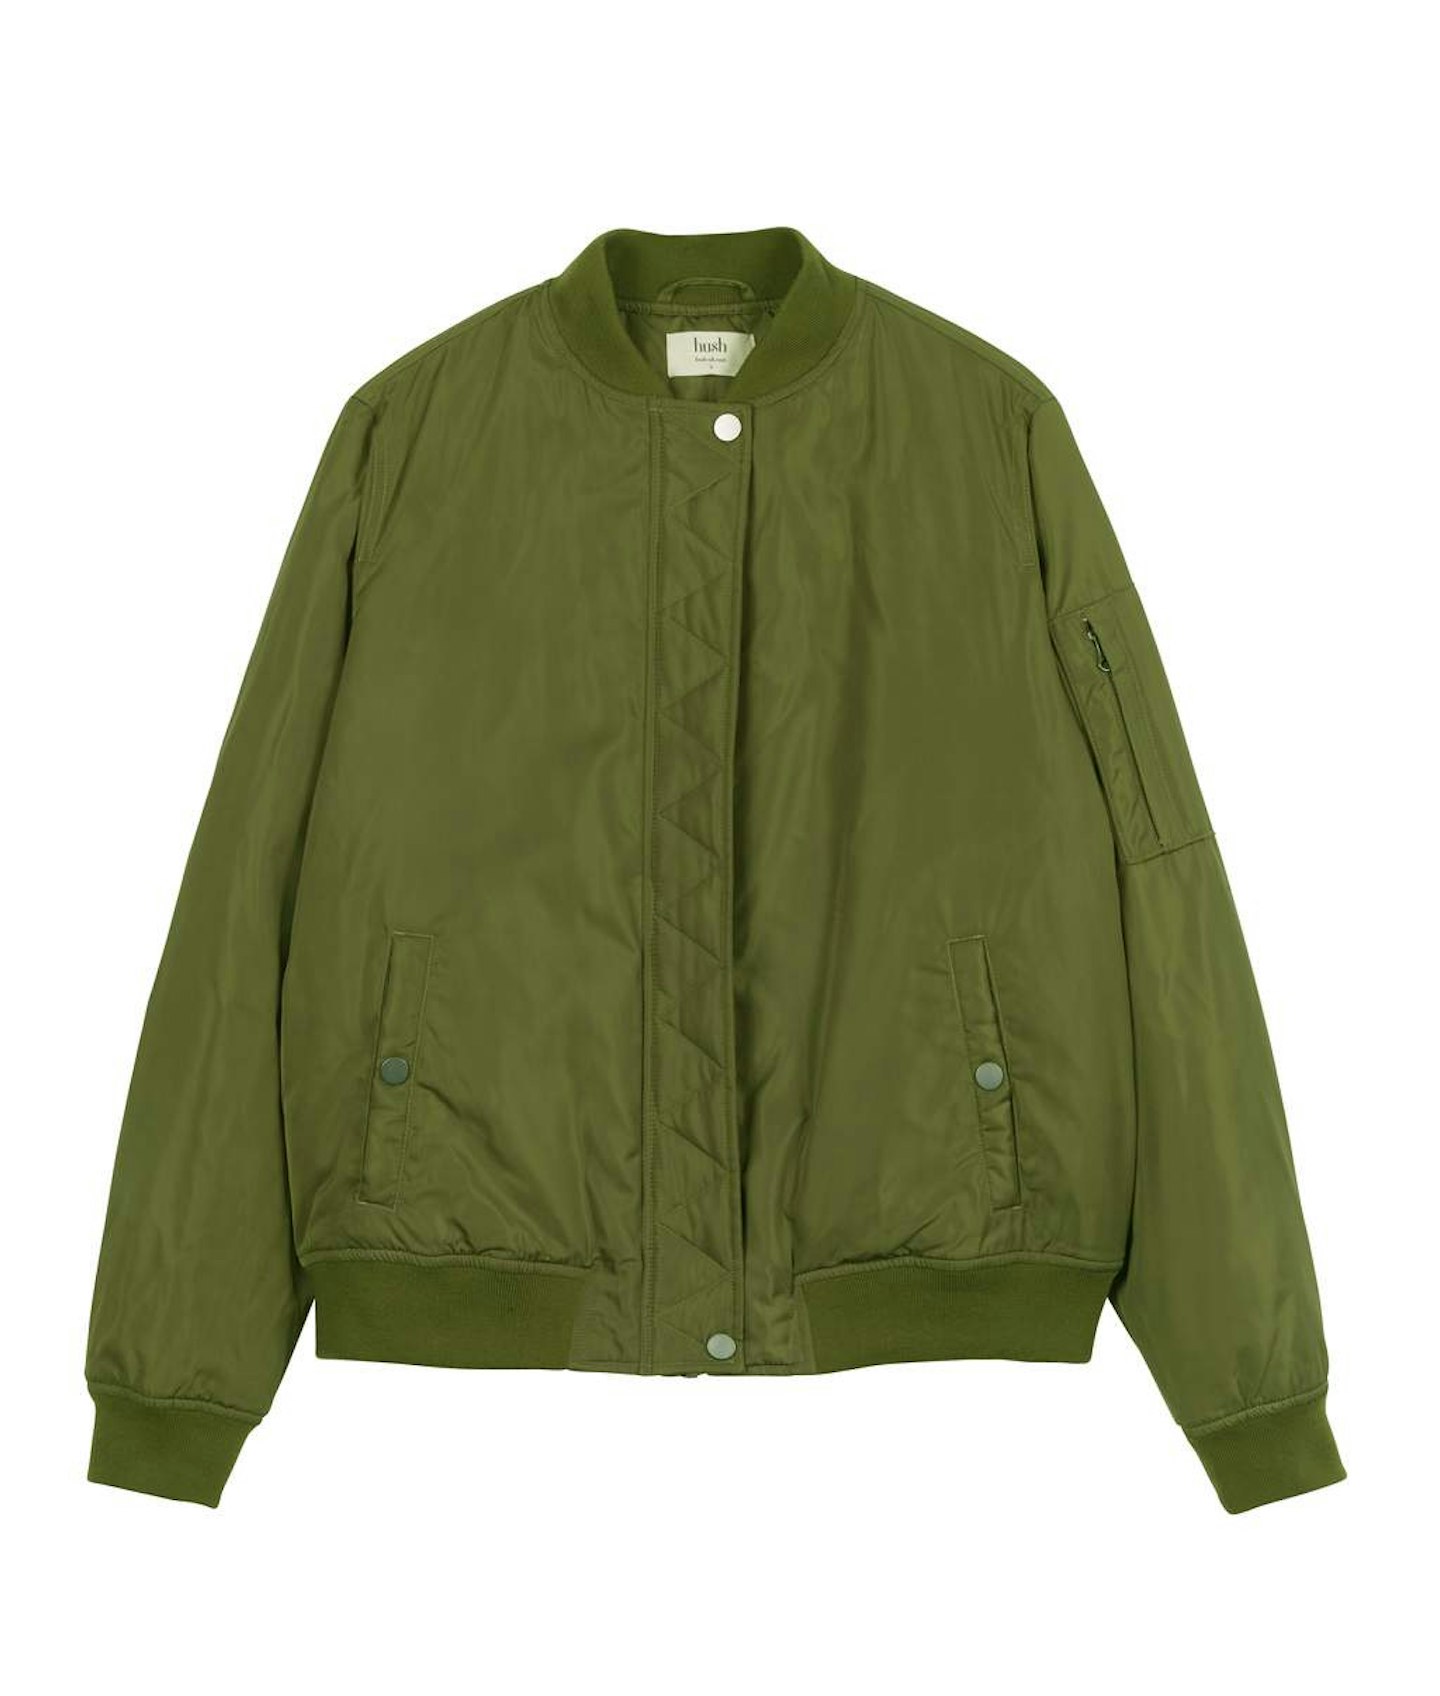 hush-green-bomber-jacket